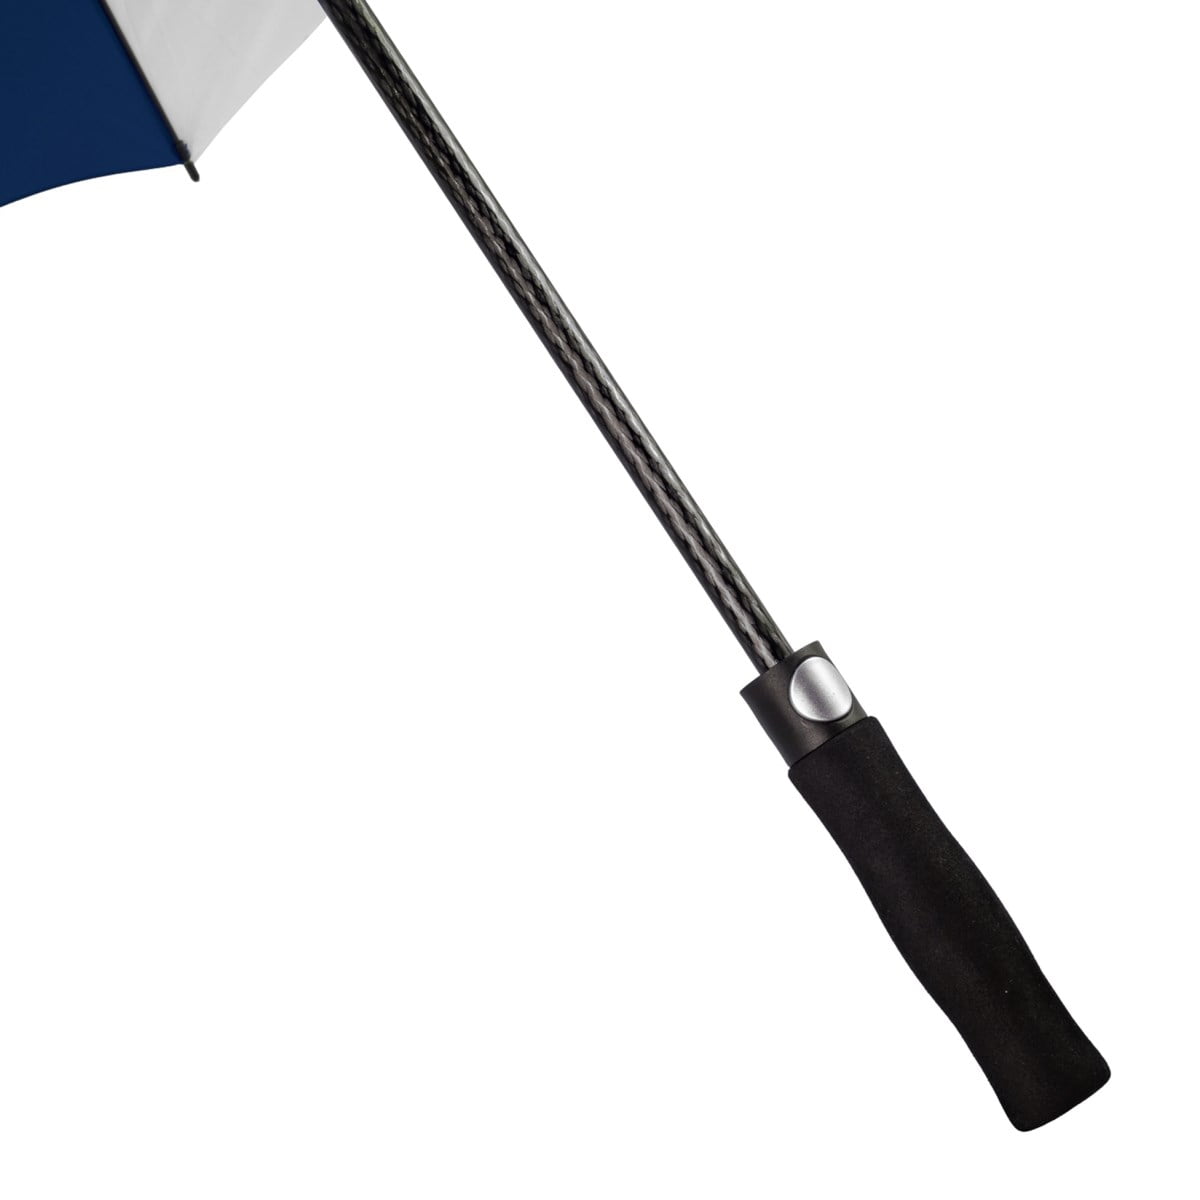 Handle and Shaft of Premium Navy & White Golf Umbrella - Windproof - Auto-Open